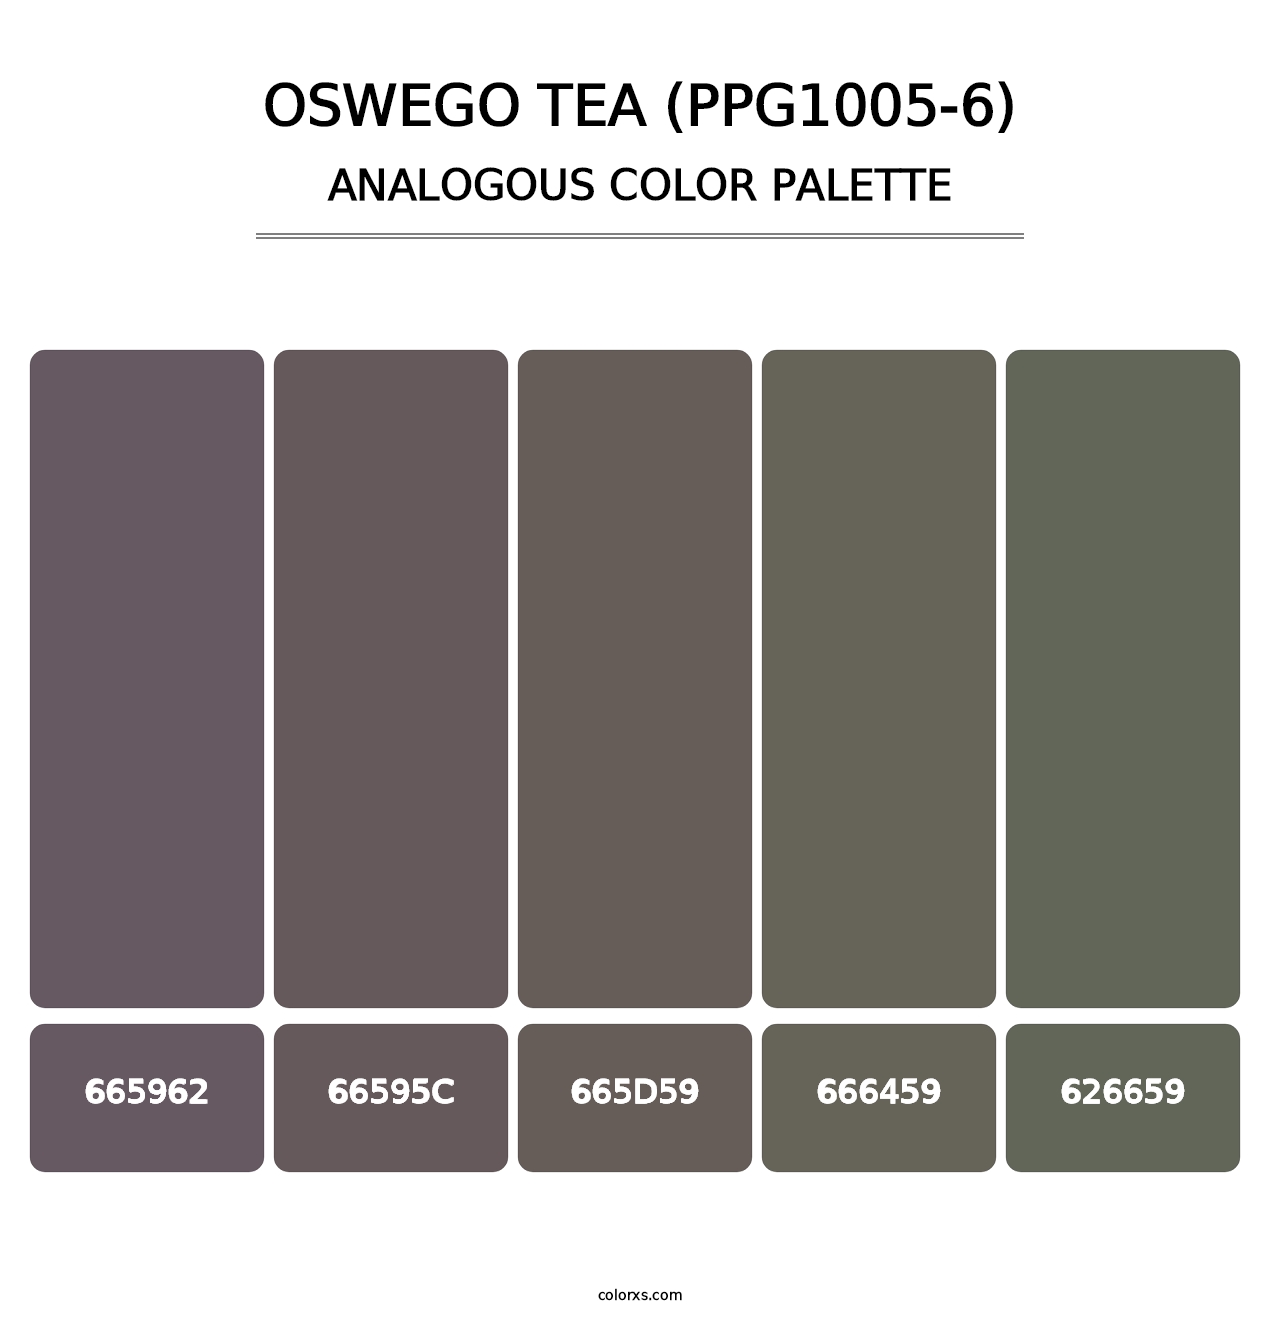 Oswego Tea (PPG1005-6) - Analogous Color Palette